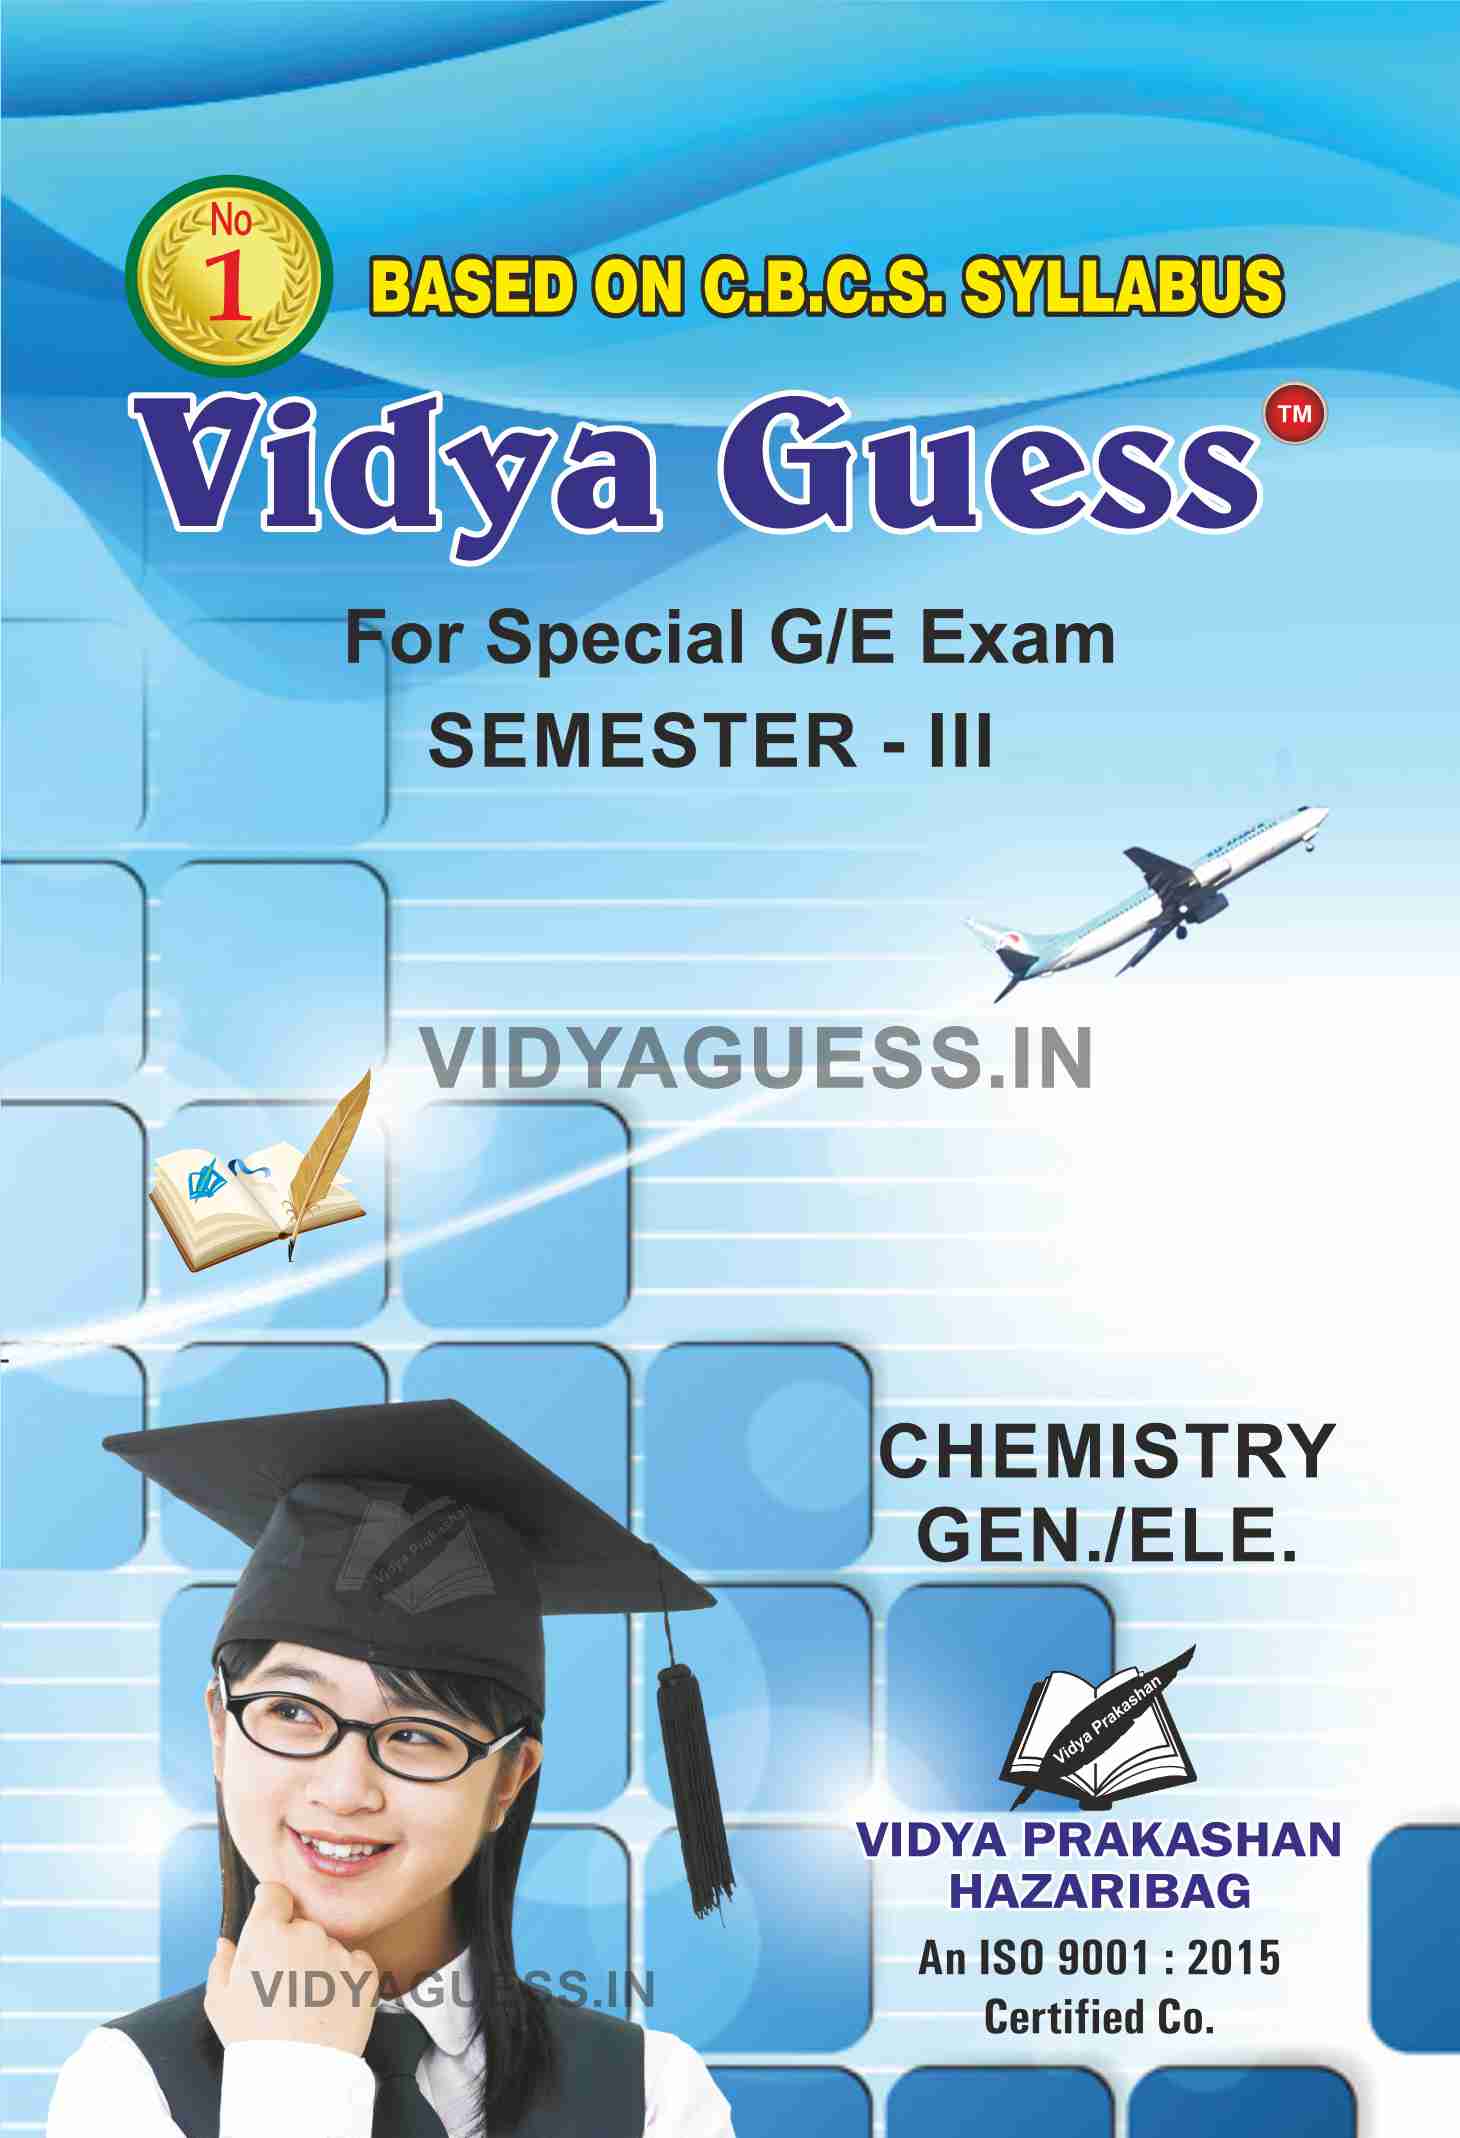 Chemistry GEN./ELE. For SEMESTER - III Special Generic Exam